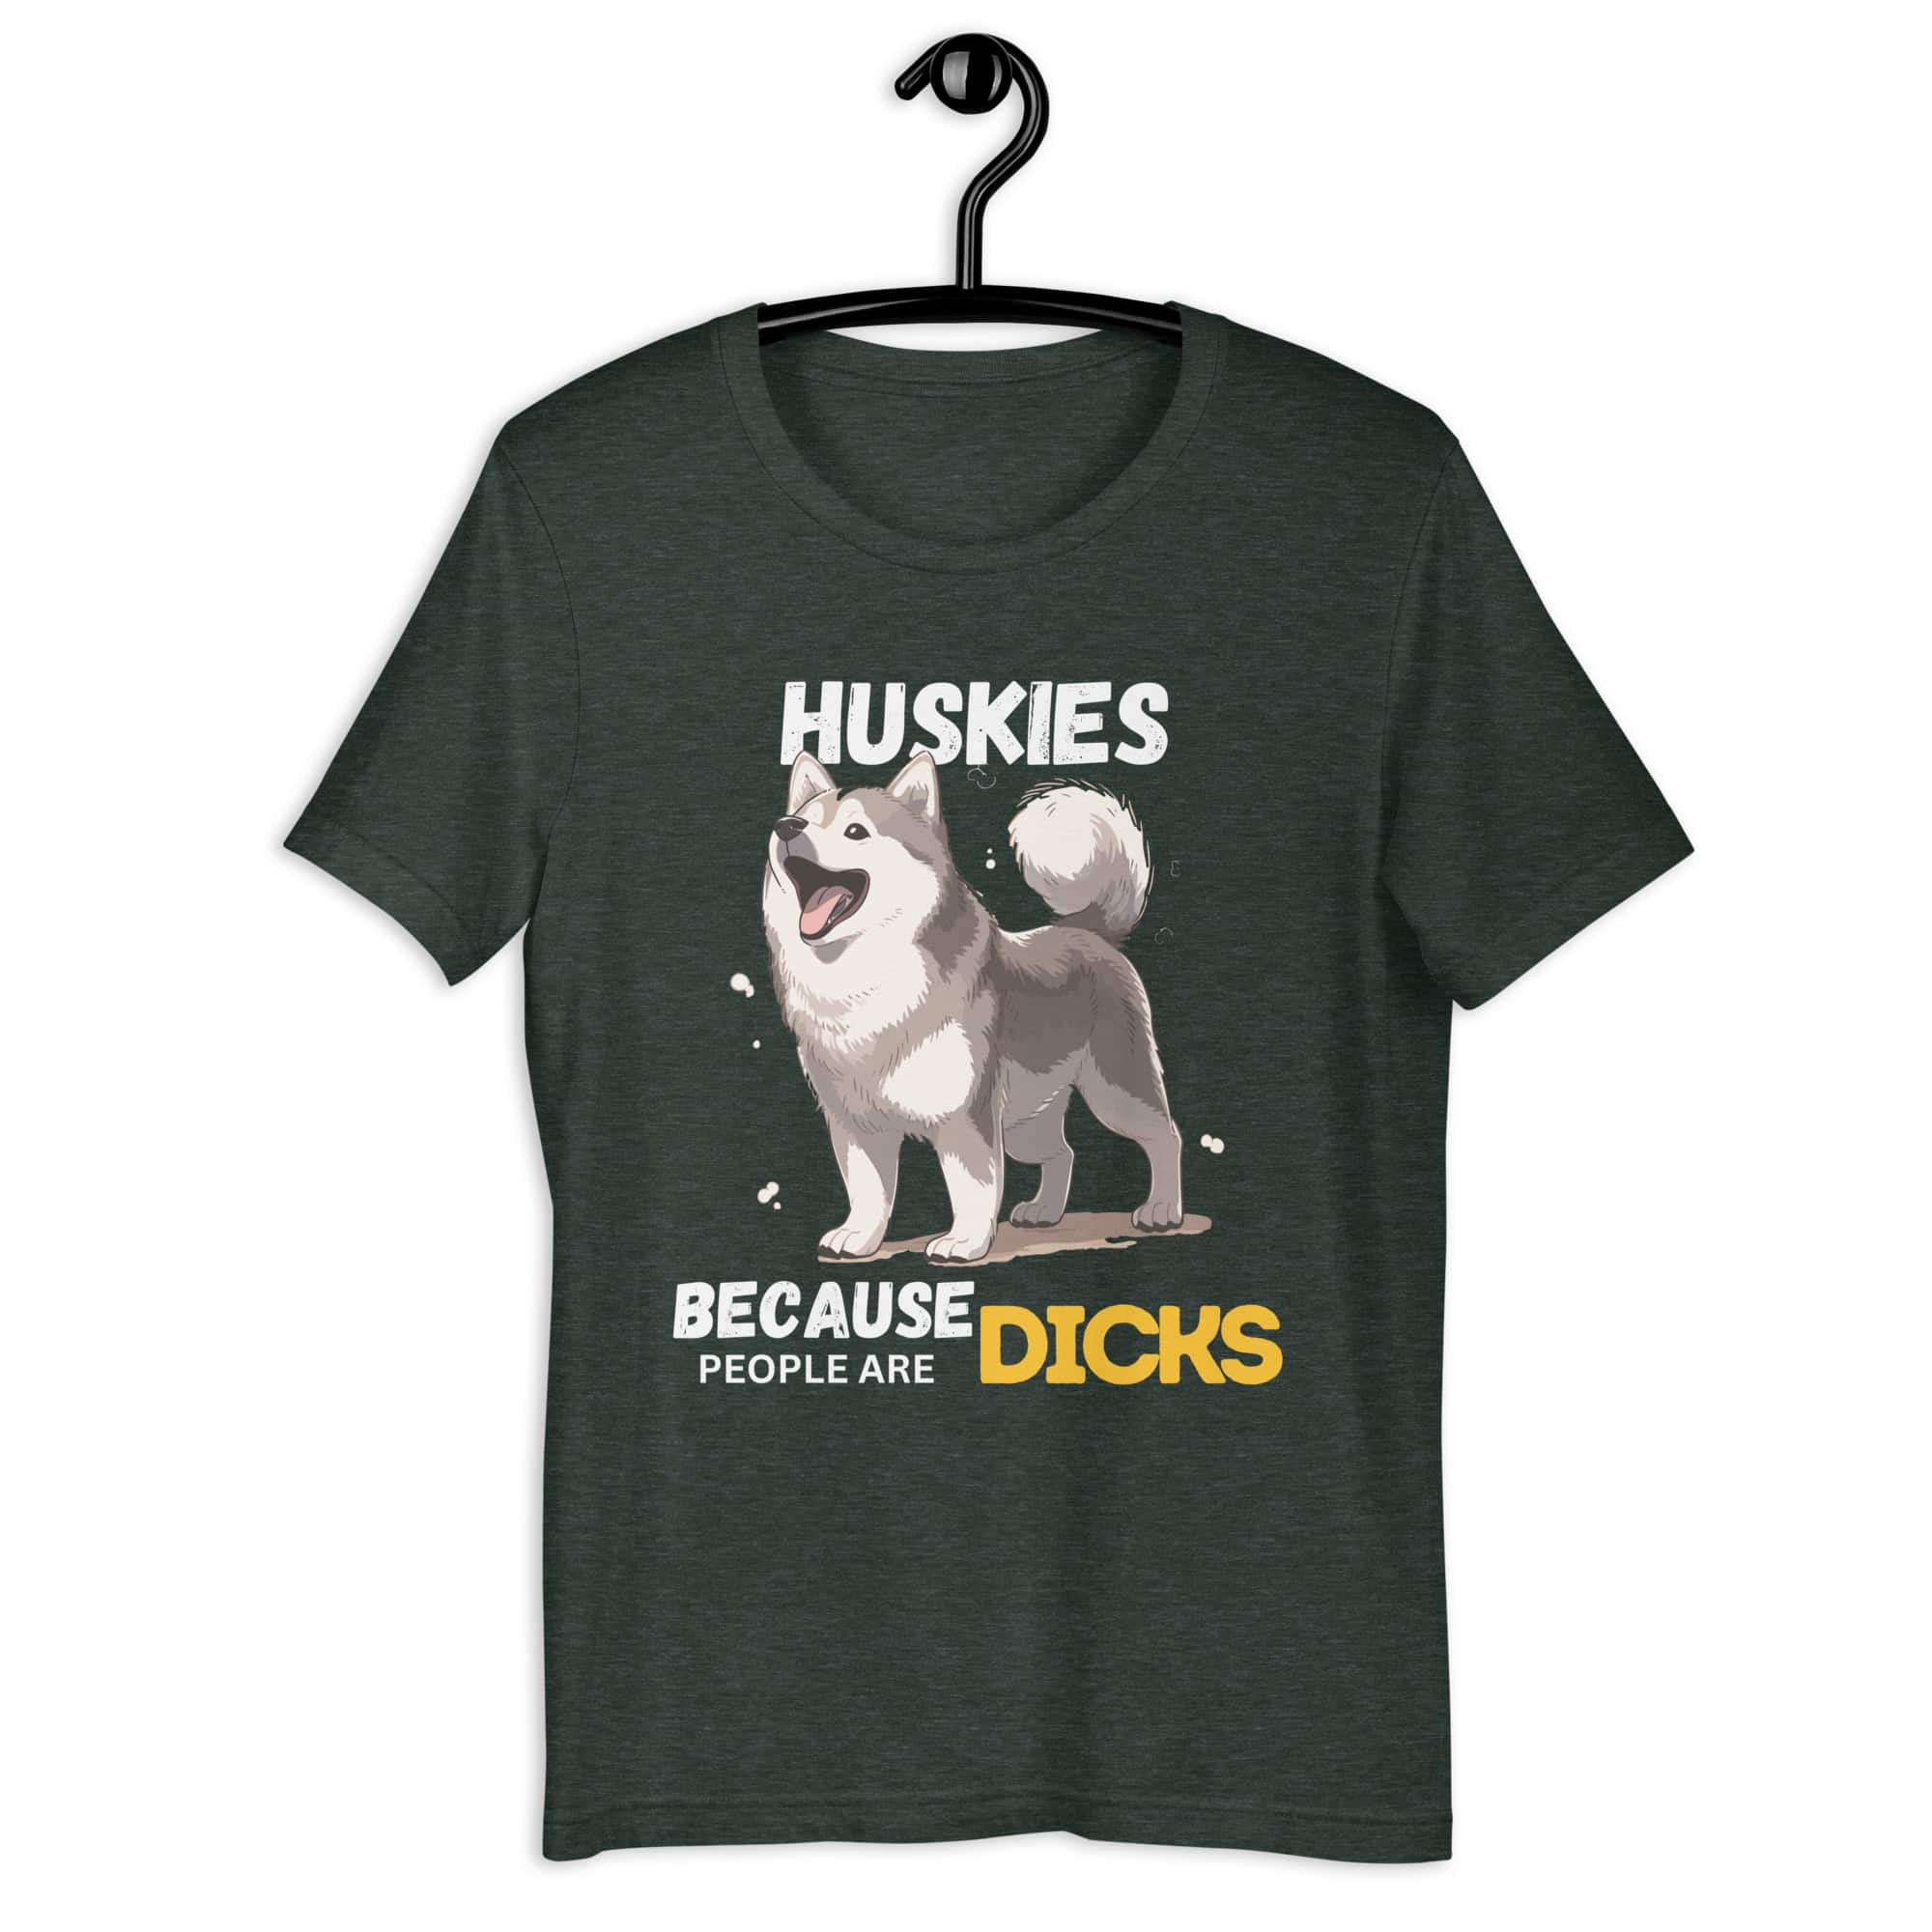 Huskies Because People Are Dicks Unisex T-Shirt matte green